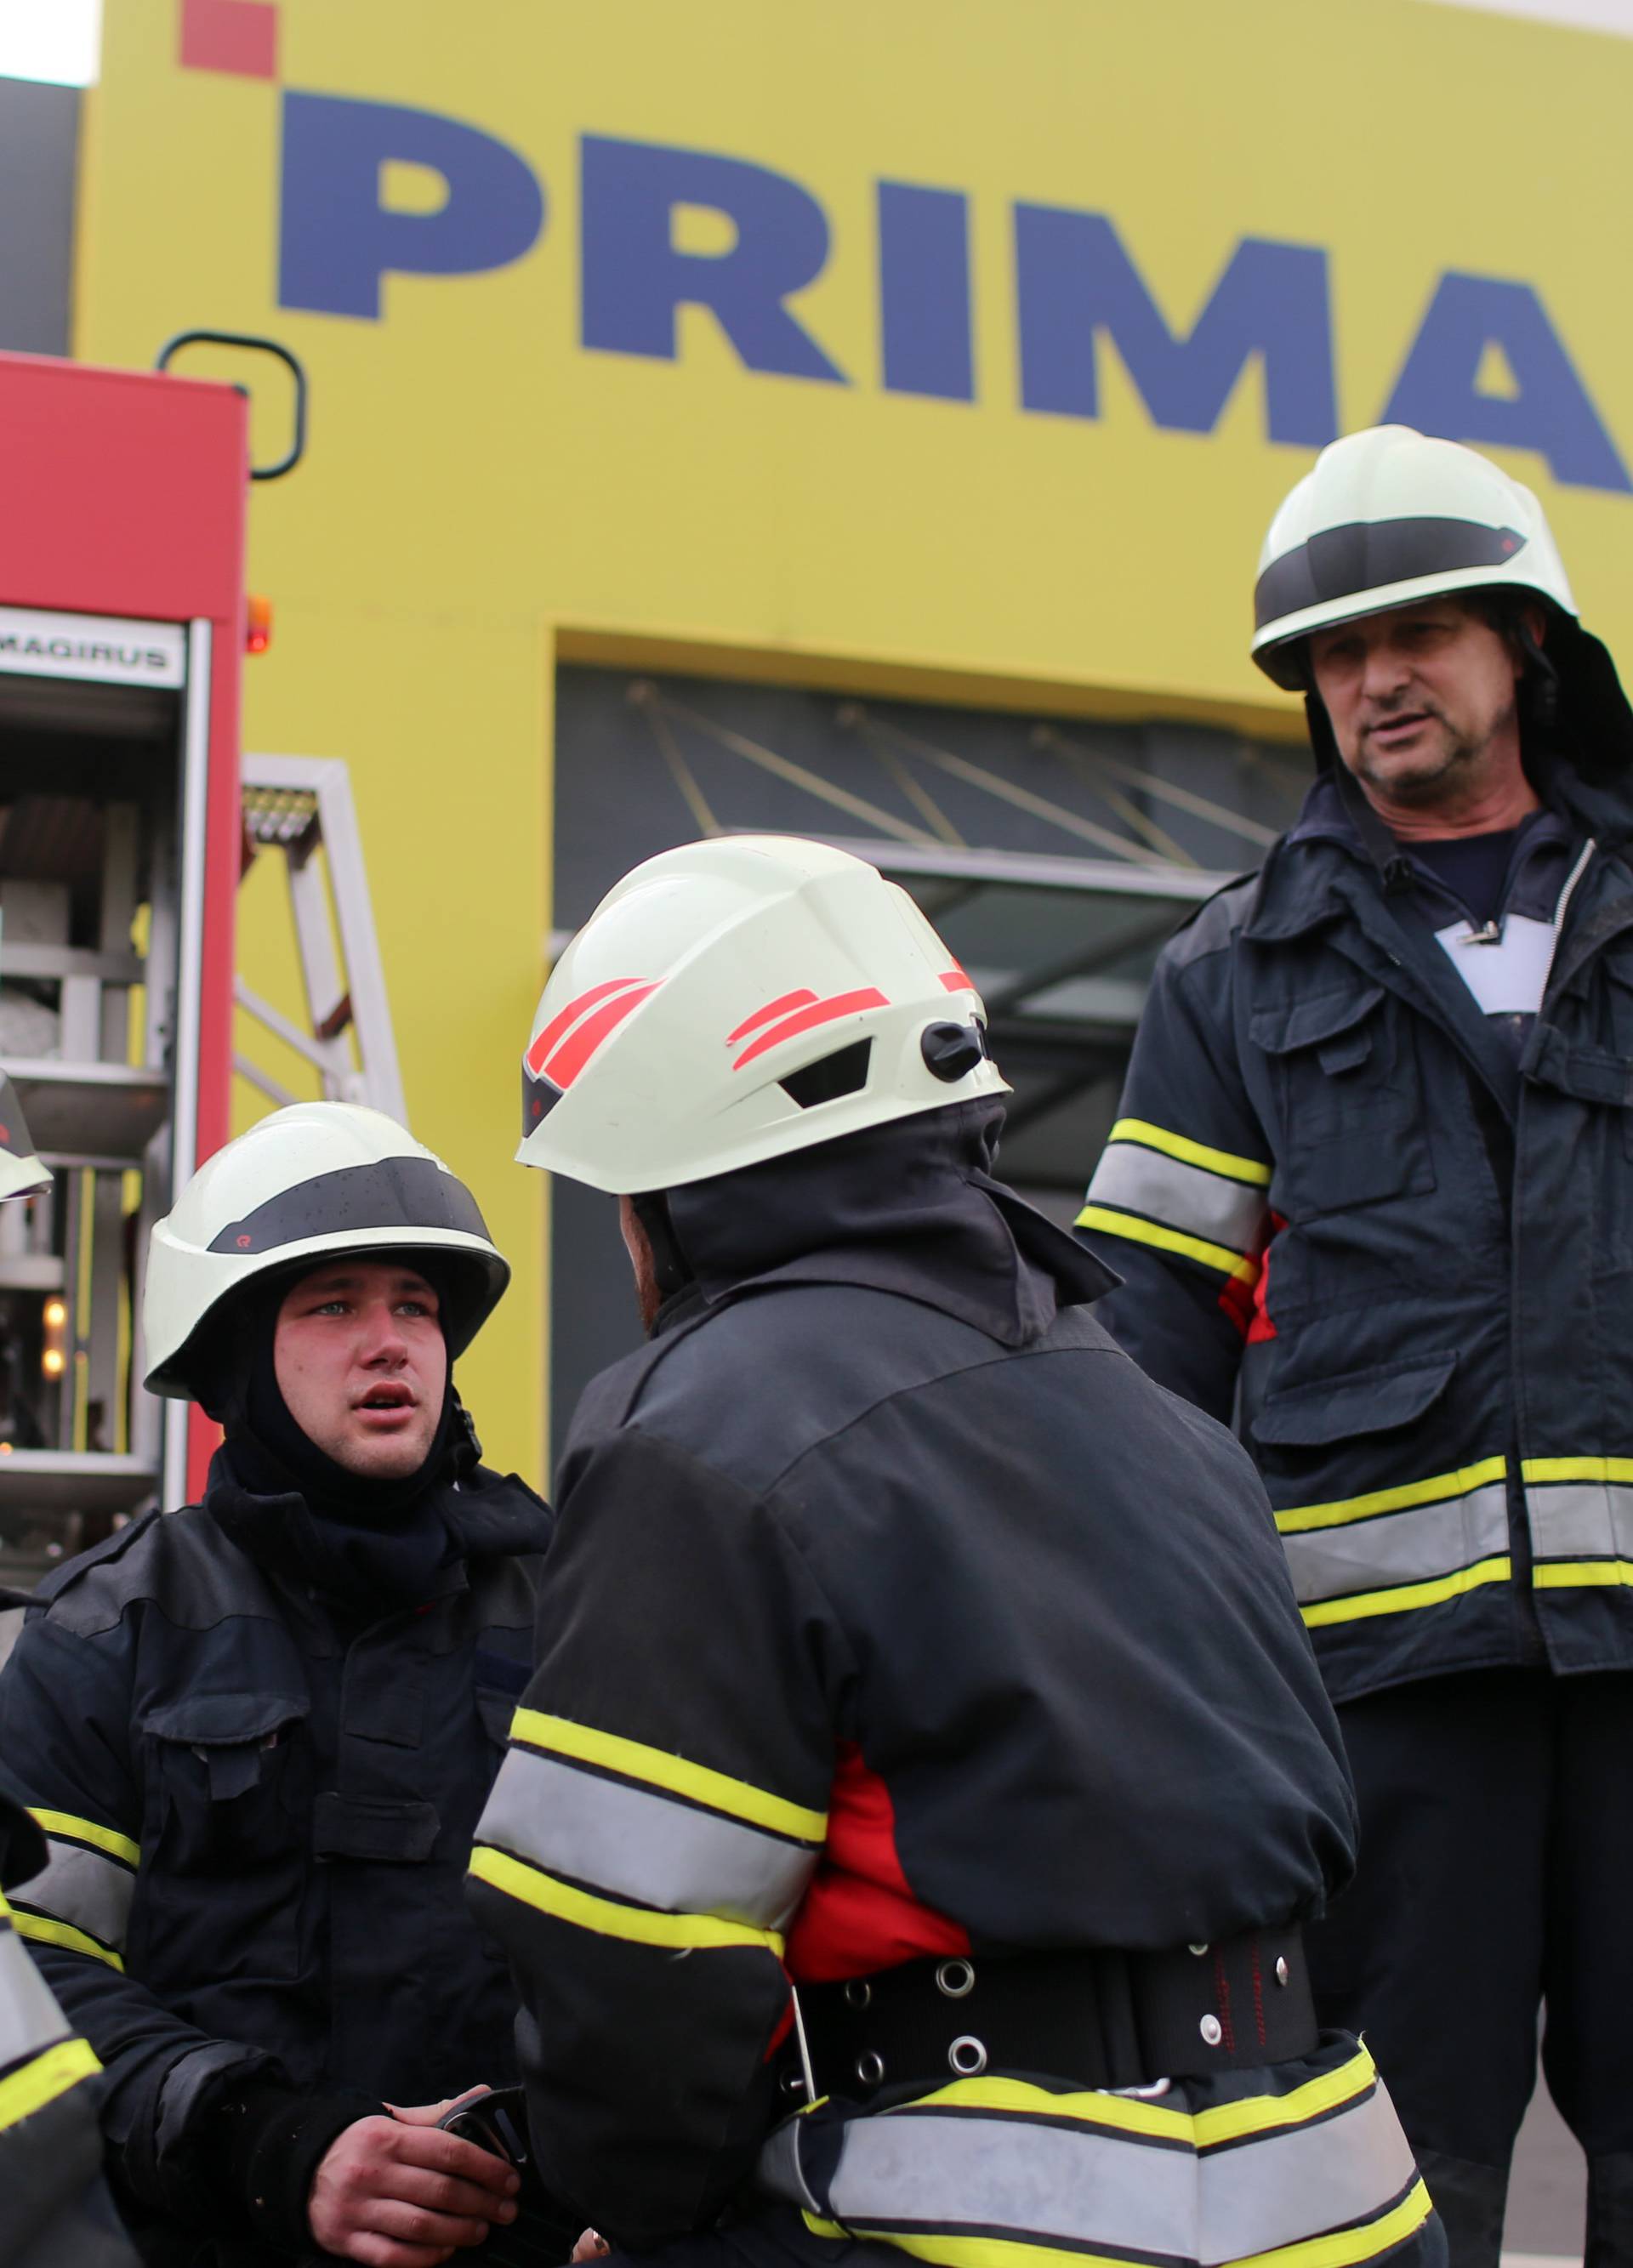 Gori 'Prima'  u Zagrebu: Požar će gasiti sve do kasno navečer